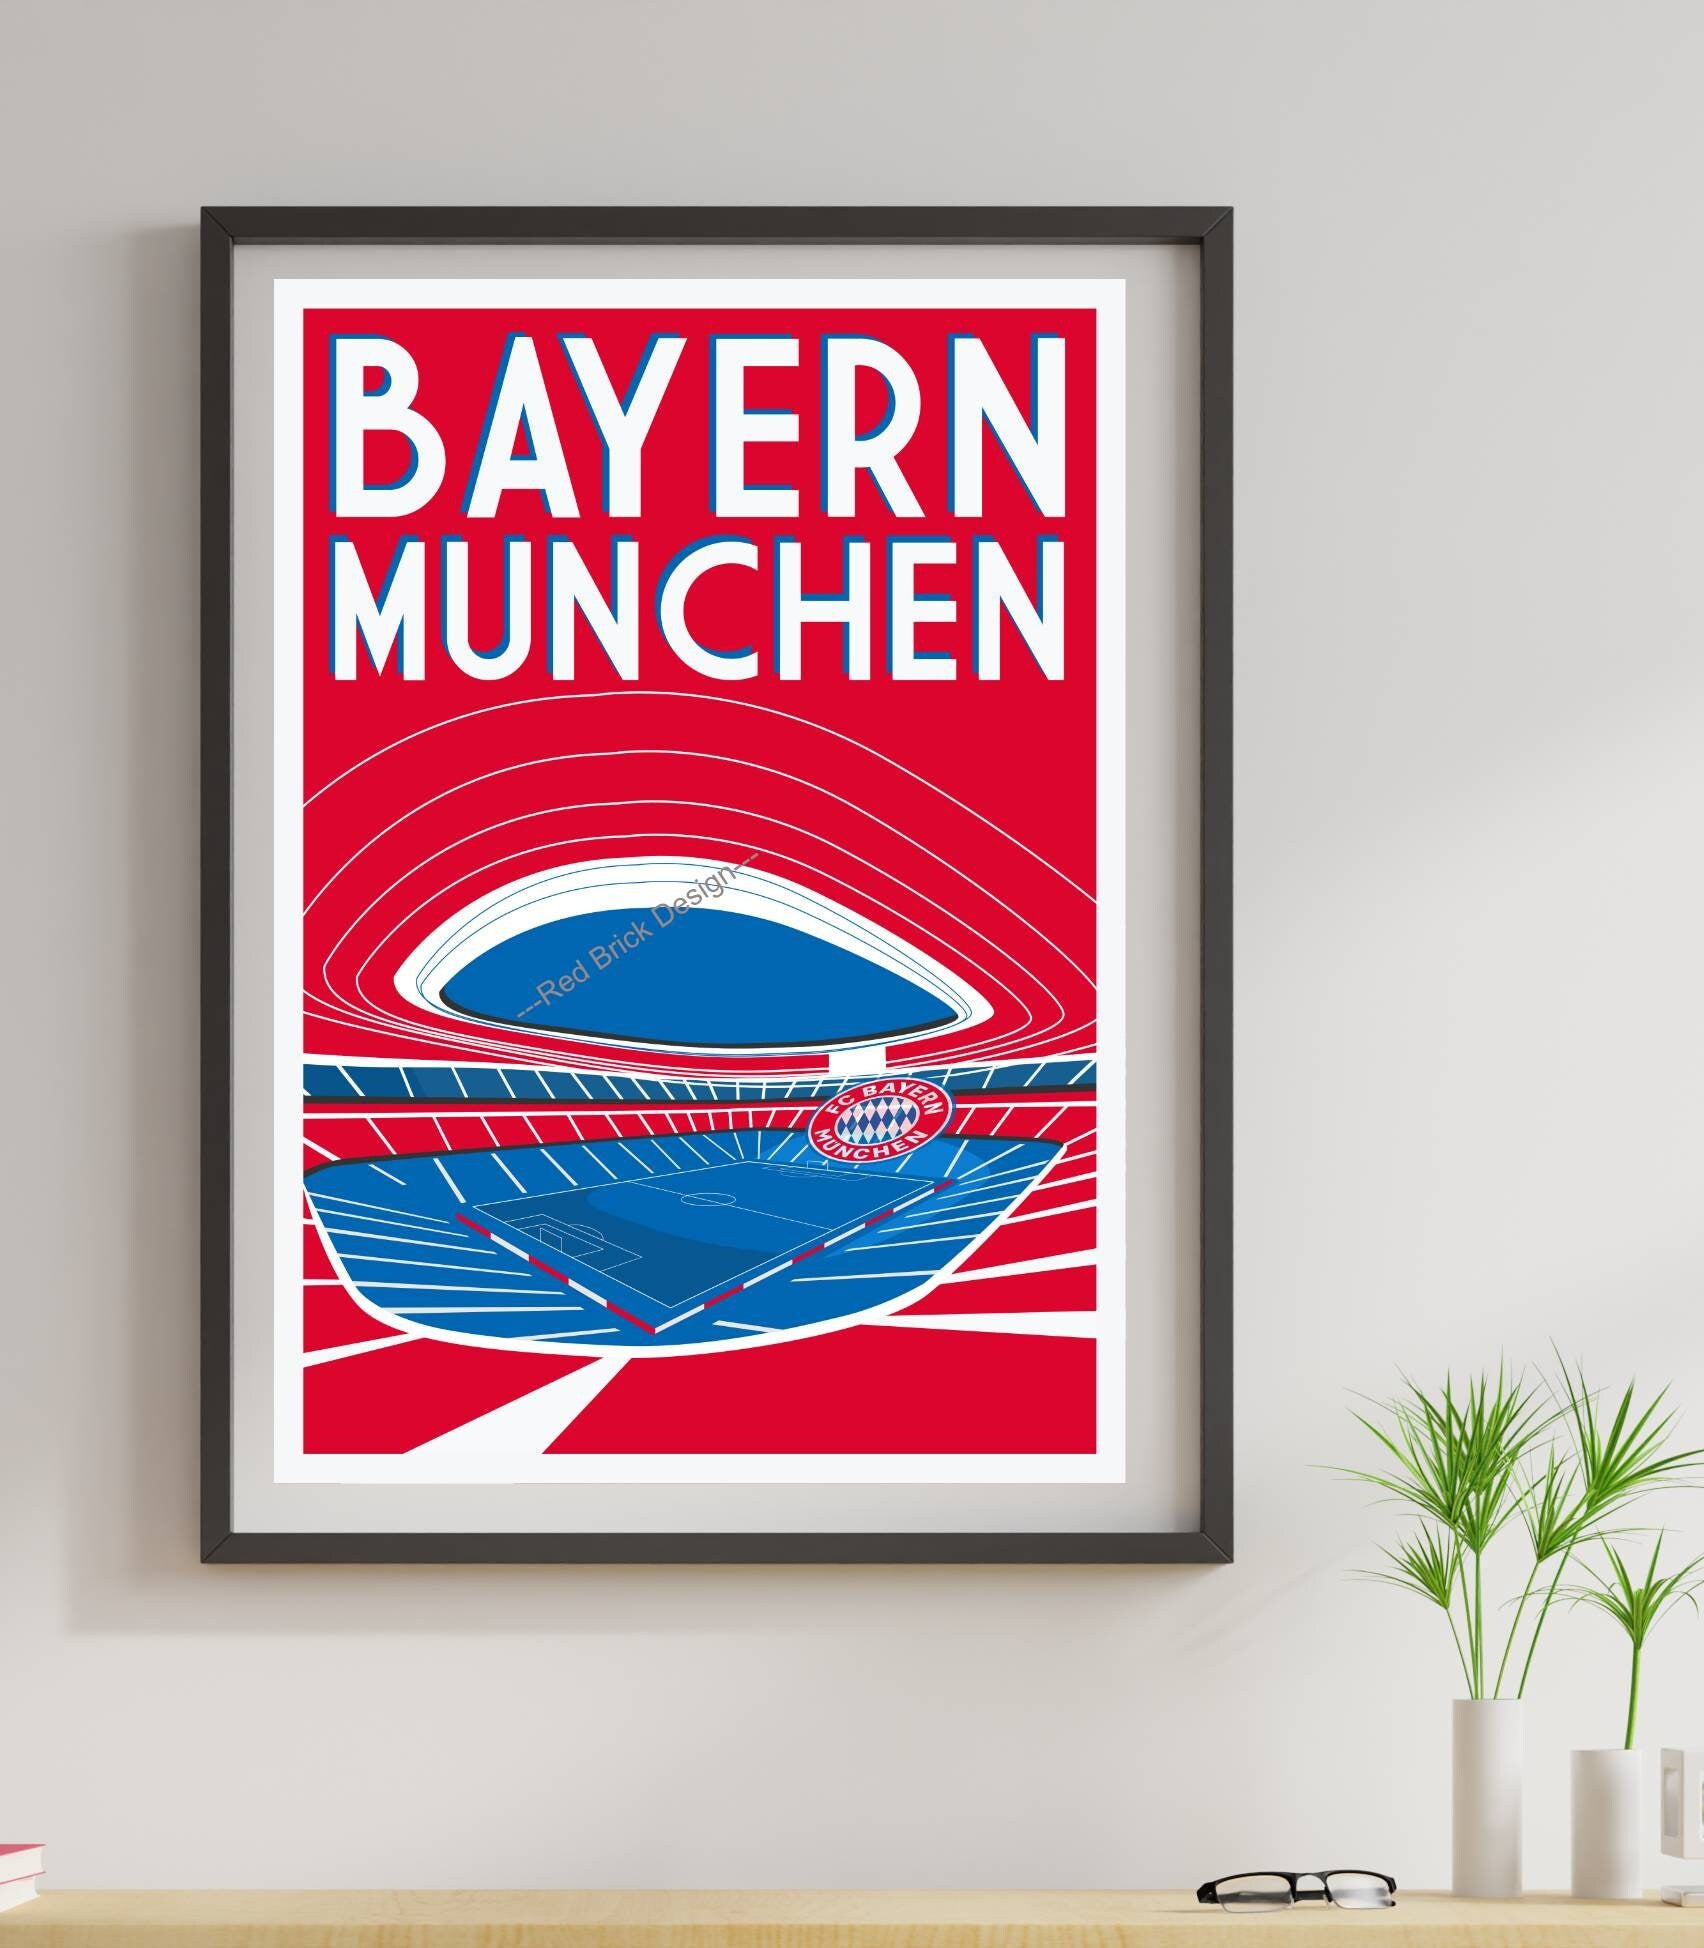 Football stadium artwork design poster